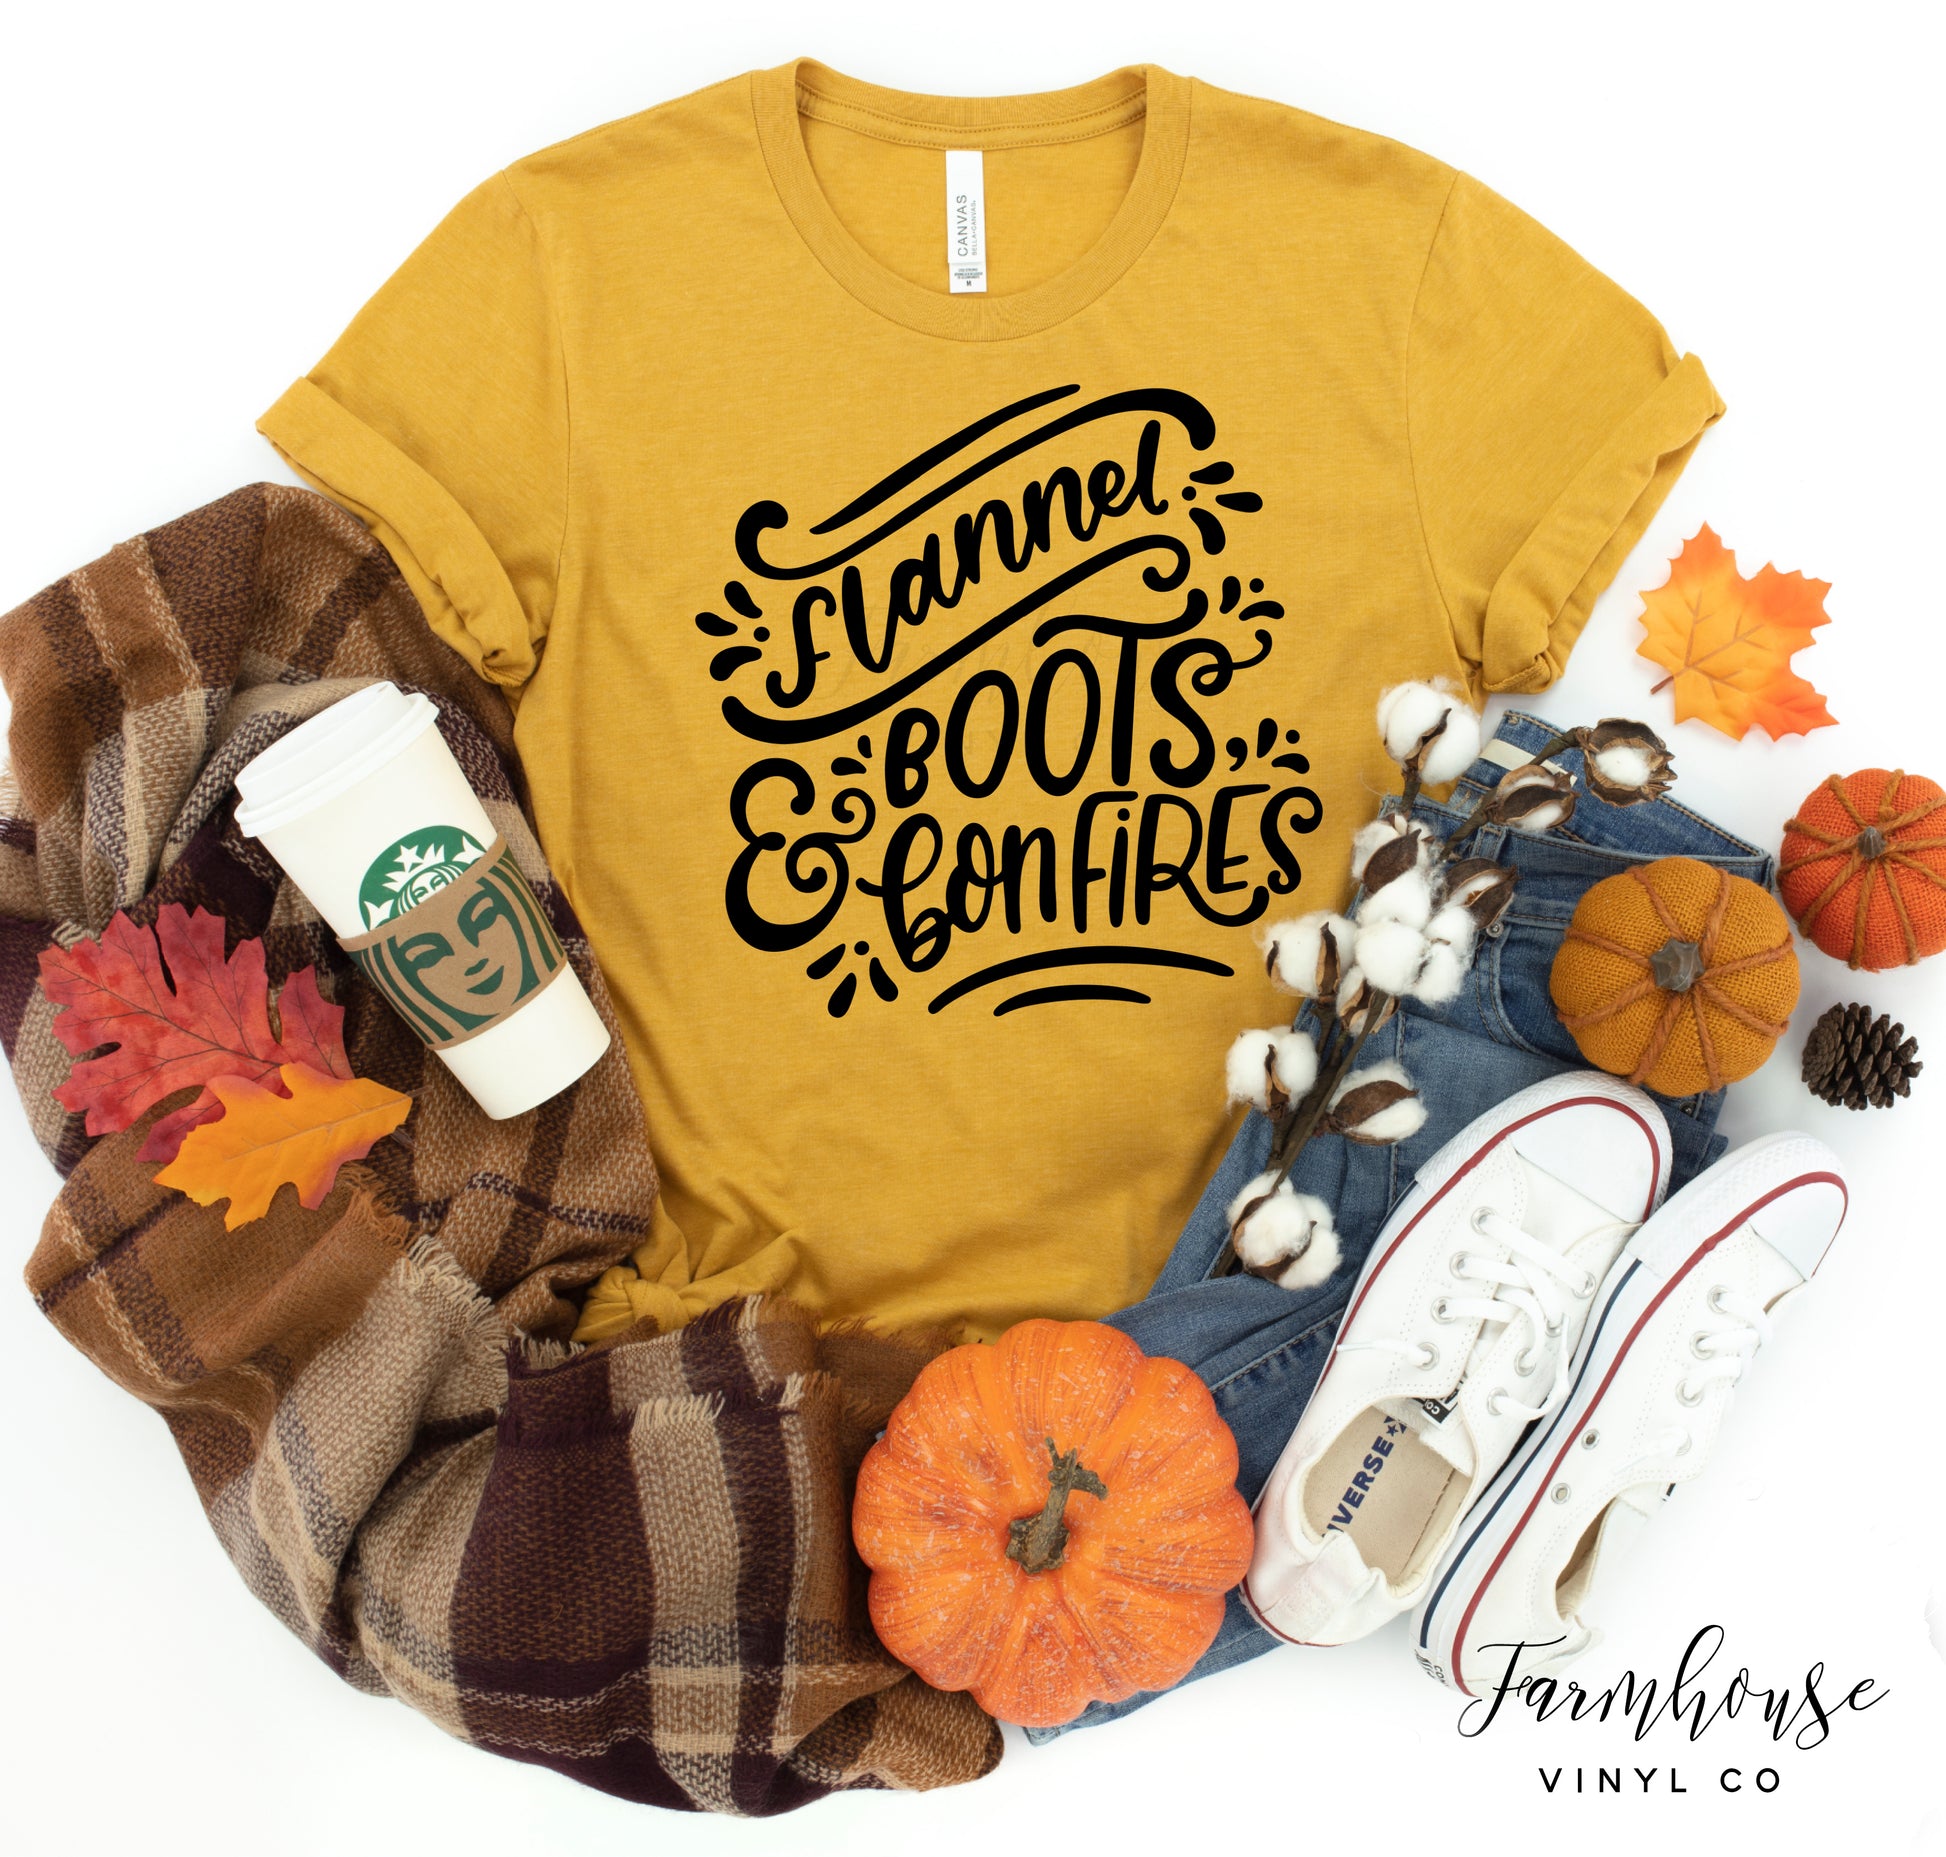 Flannel Boots and Bonfires Shirt - Farmhouse Vinyl Co